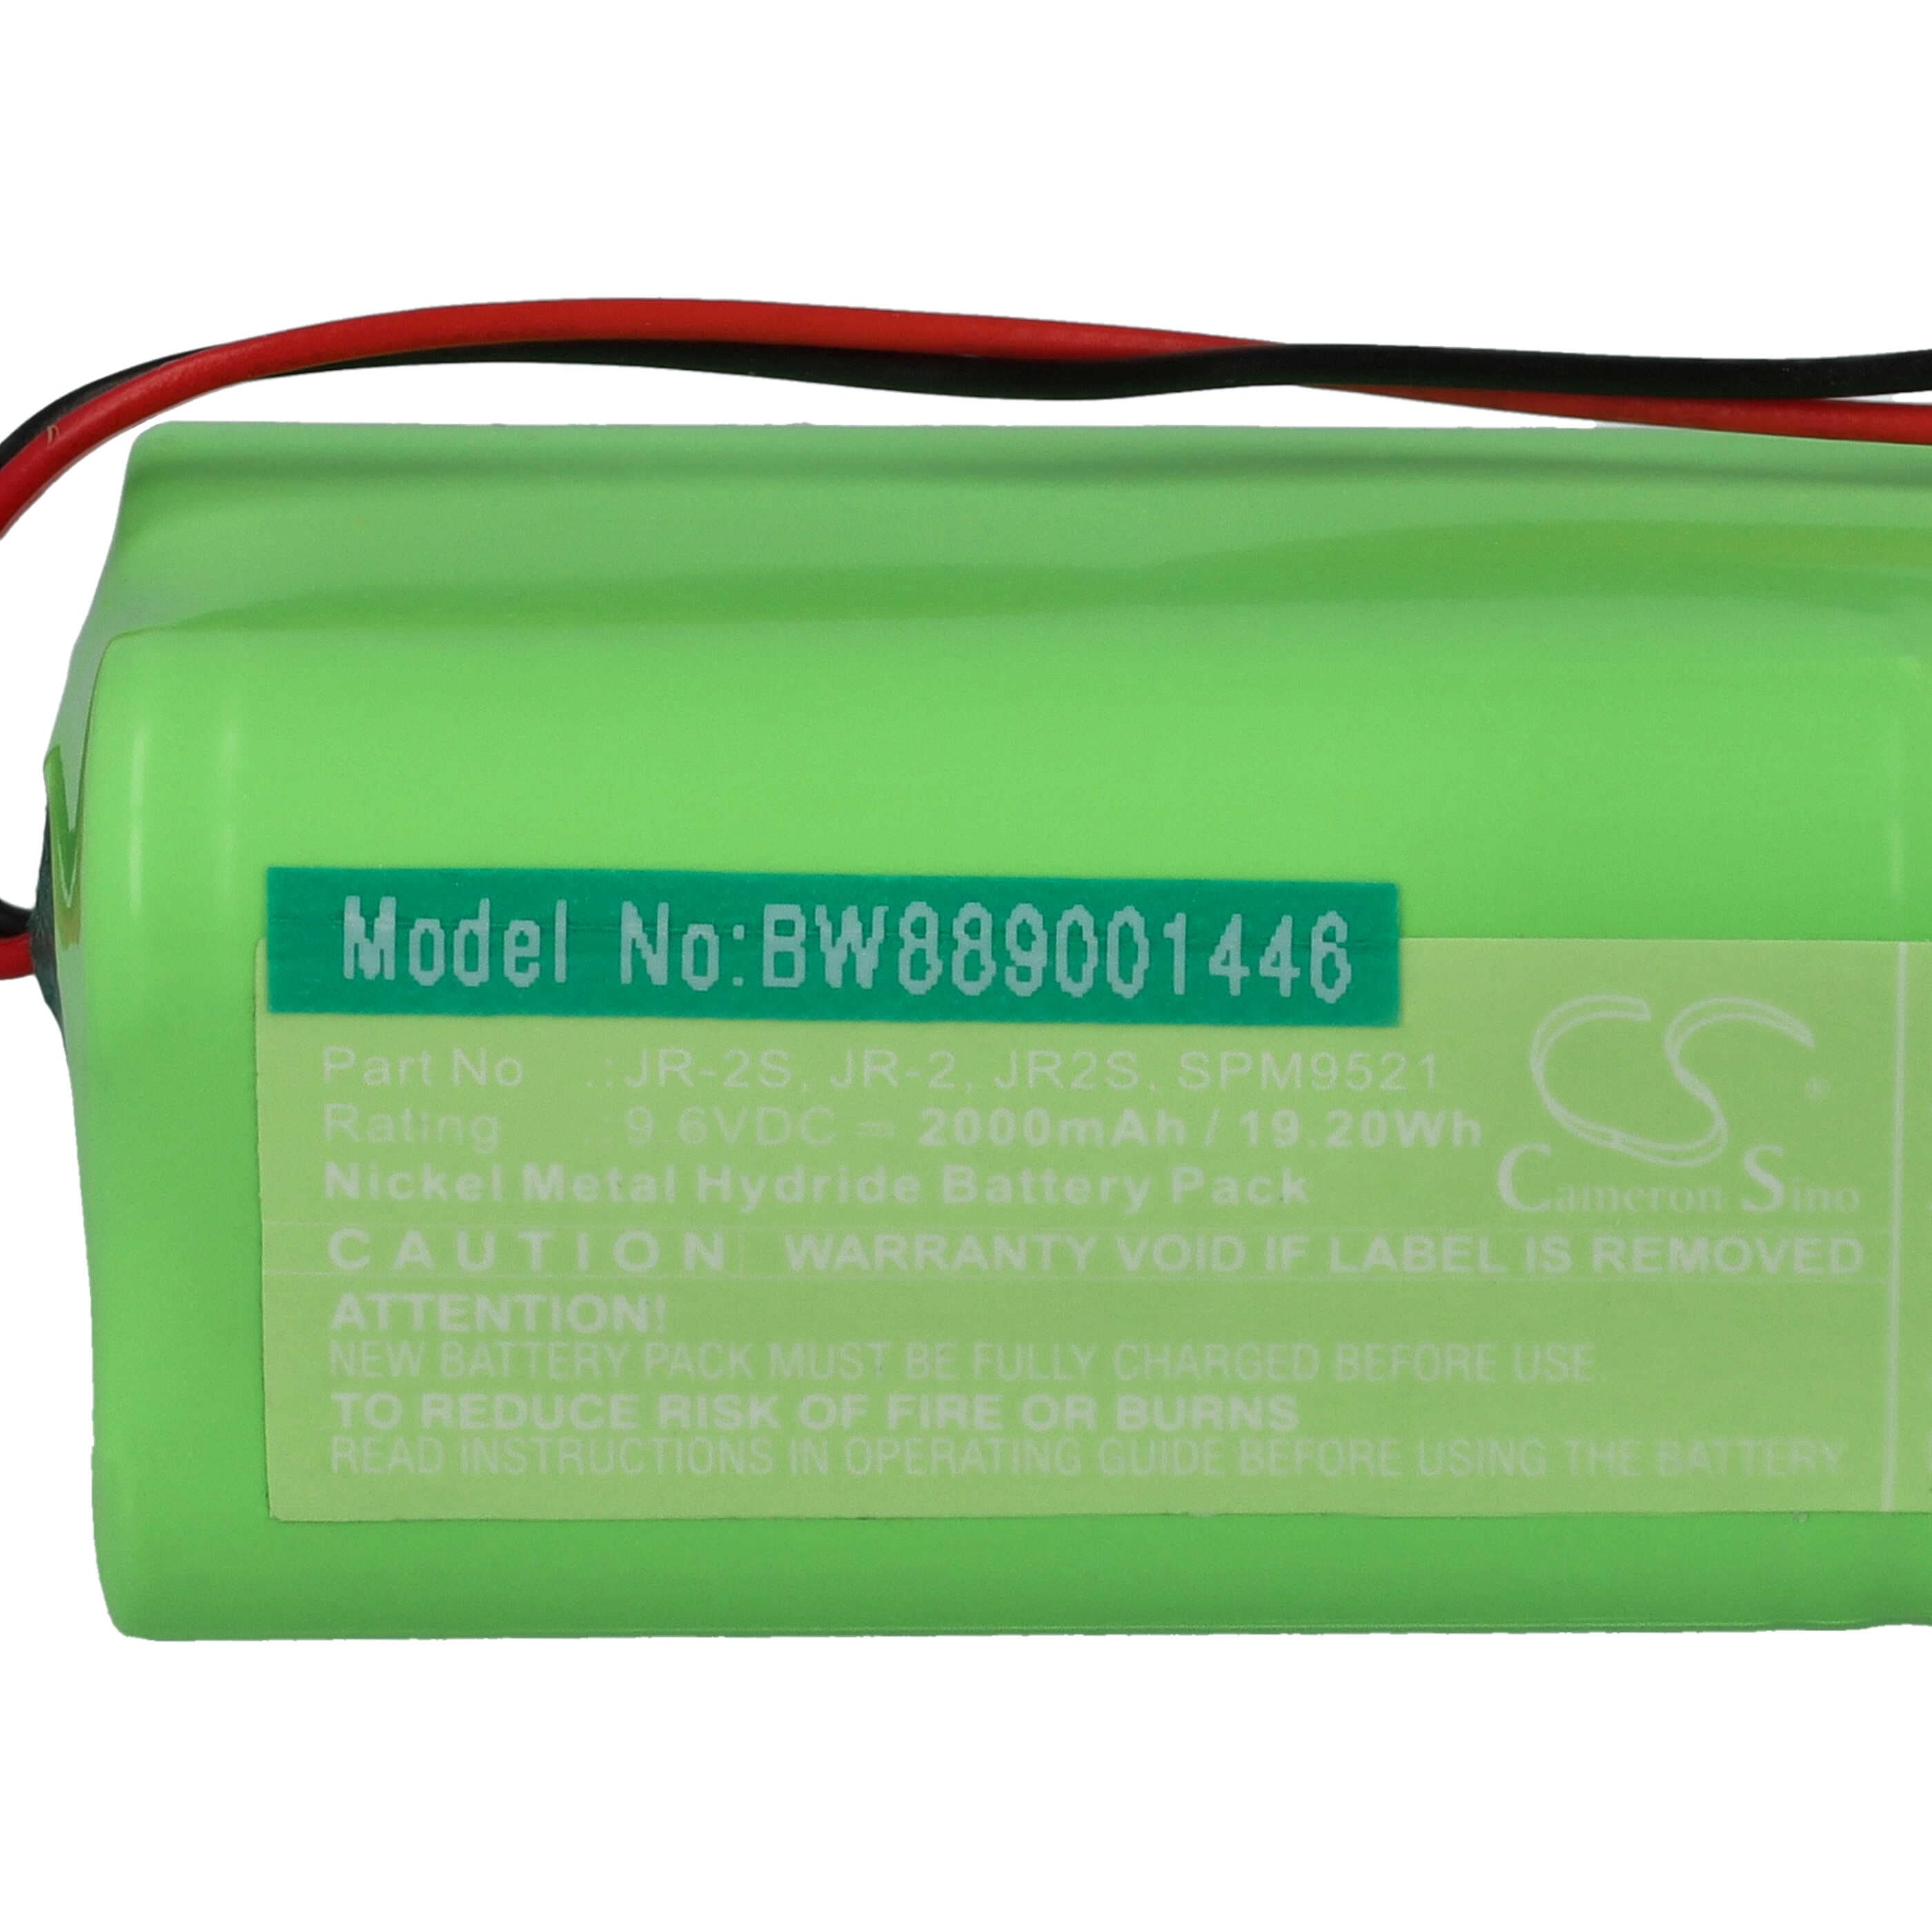 Batteria per controller drone, telecomando sostituisce Spektrum JR-2, JR2, JR2S Spektrum - 2000mAh 9,6V NiMH